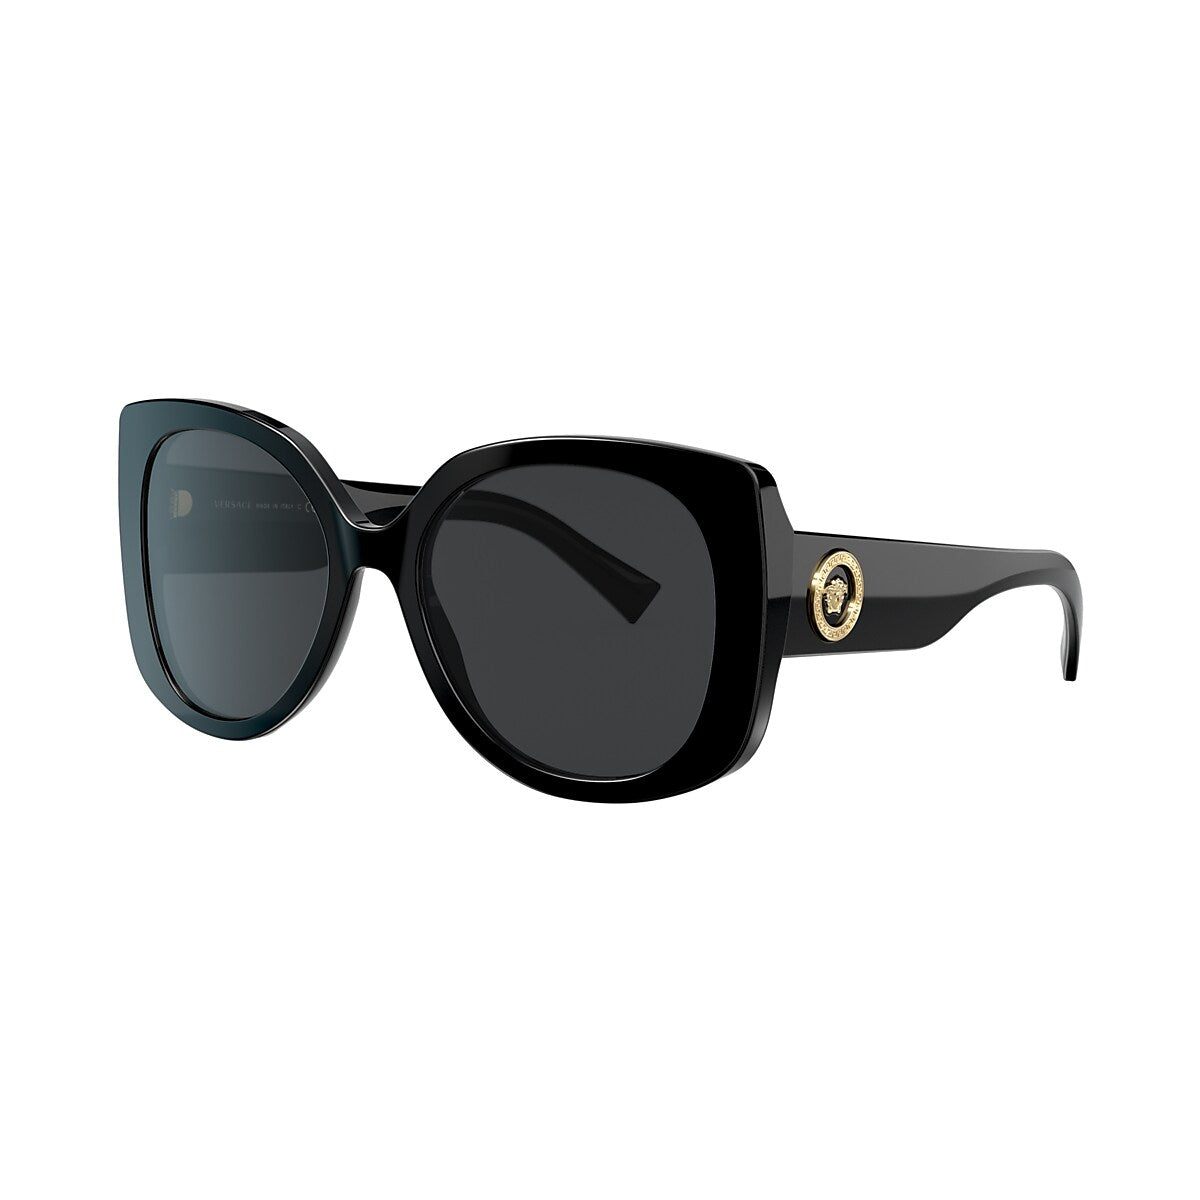 VERSACE VE4387 Black - Women Luxury Sunglasses, Dark Grey Lens